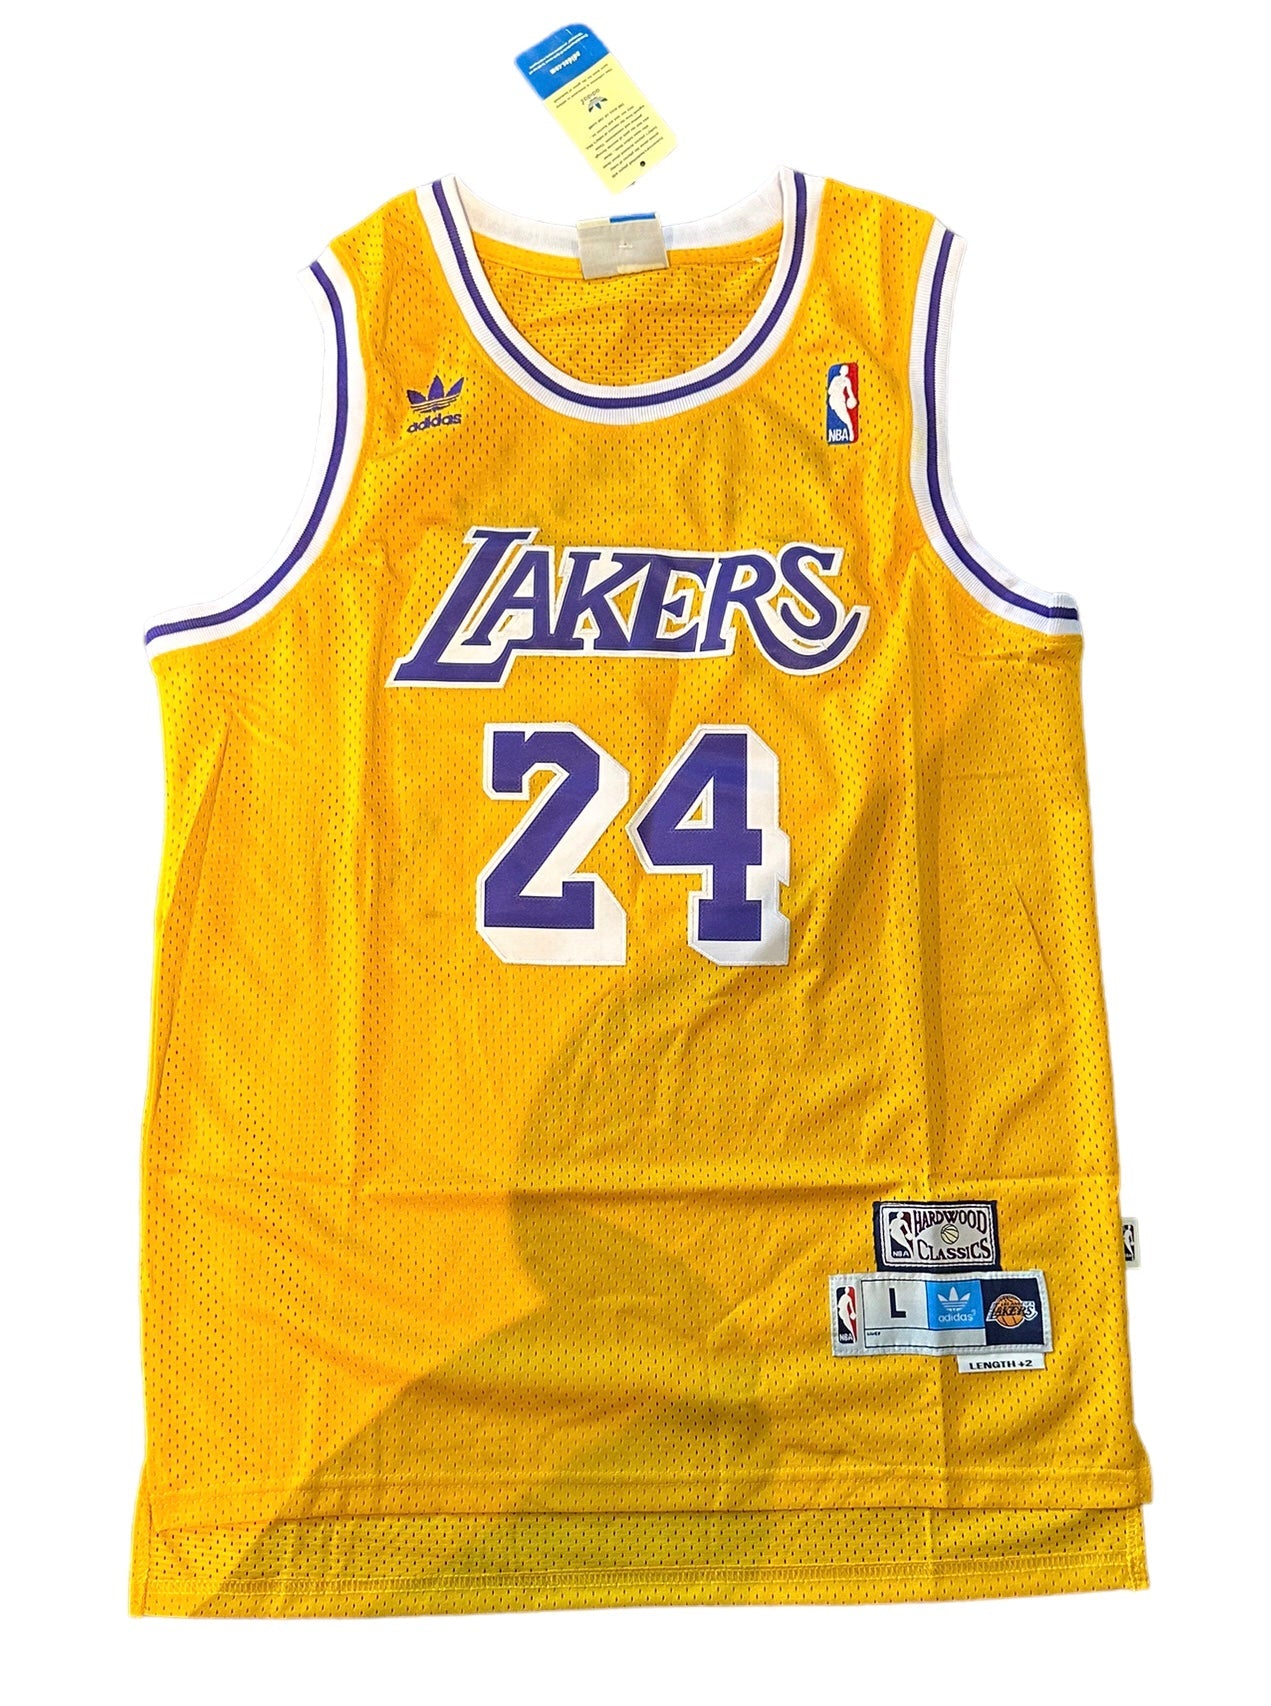 Kobe Bryant 24 Lakers Jersey – Collectors Crossroads